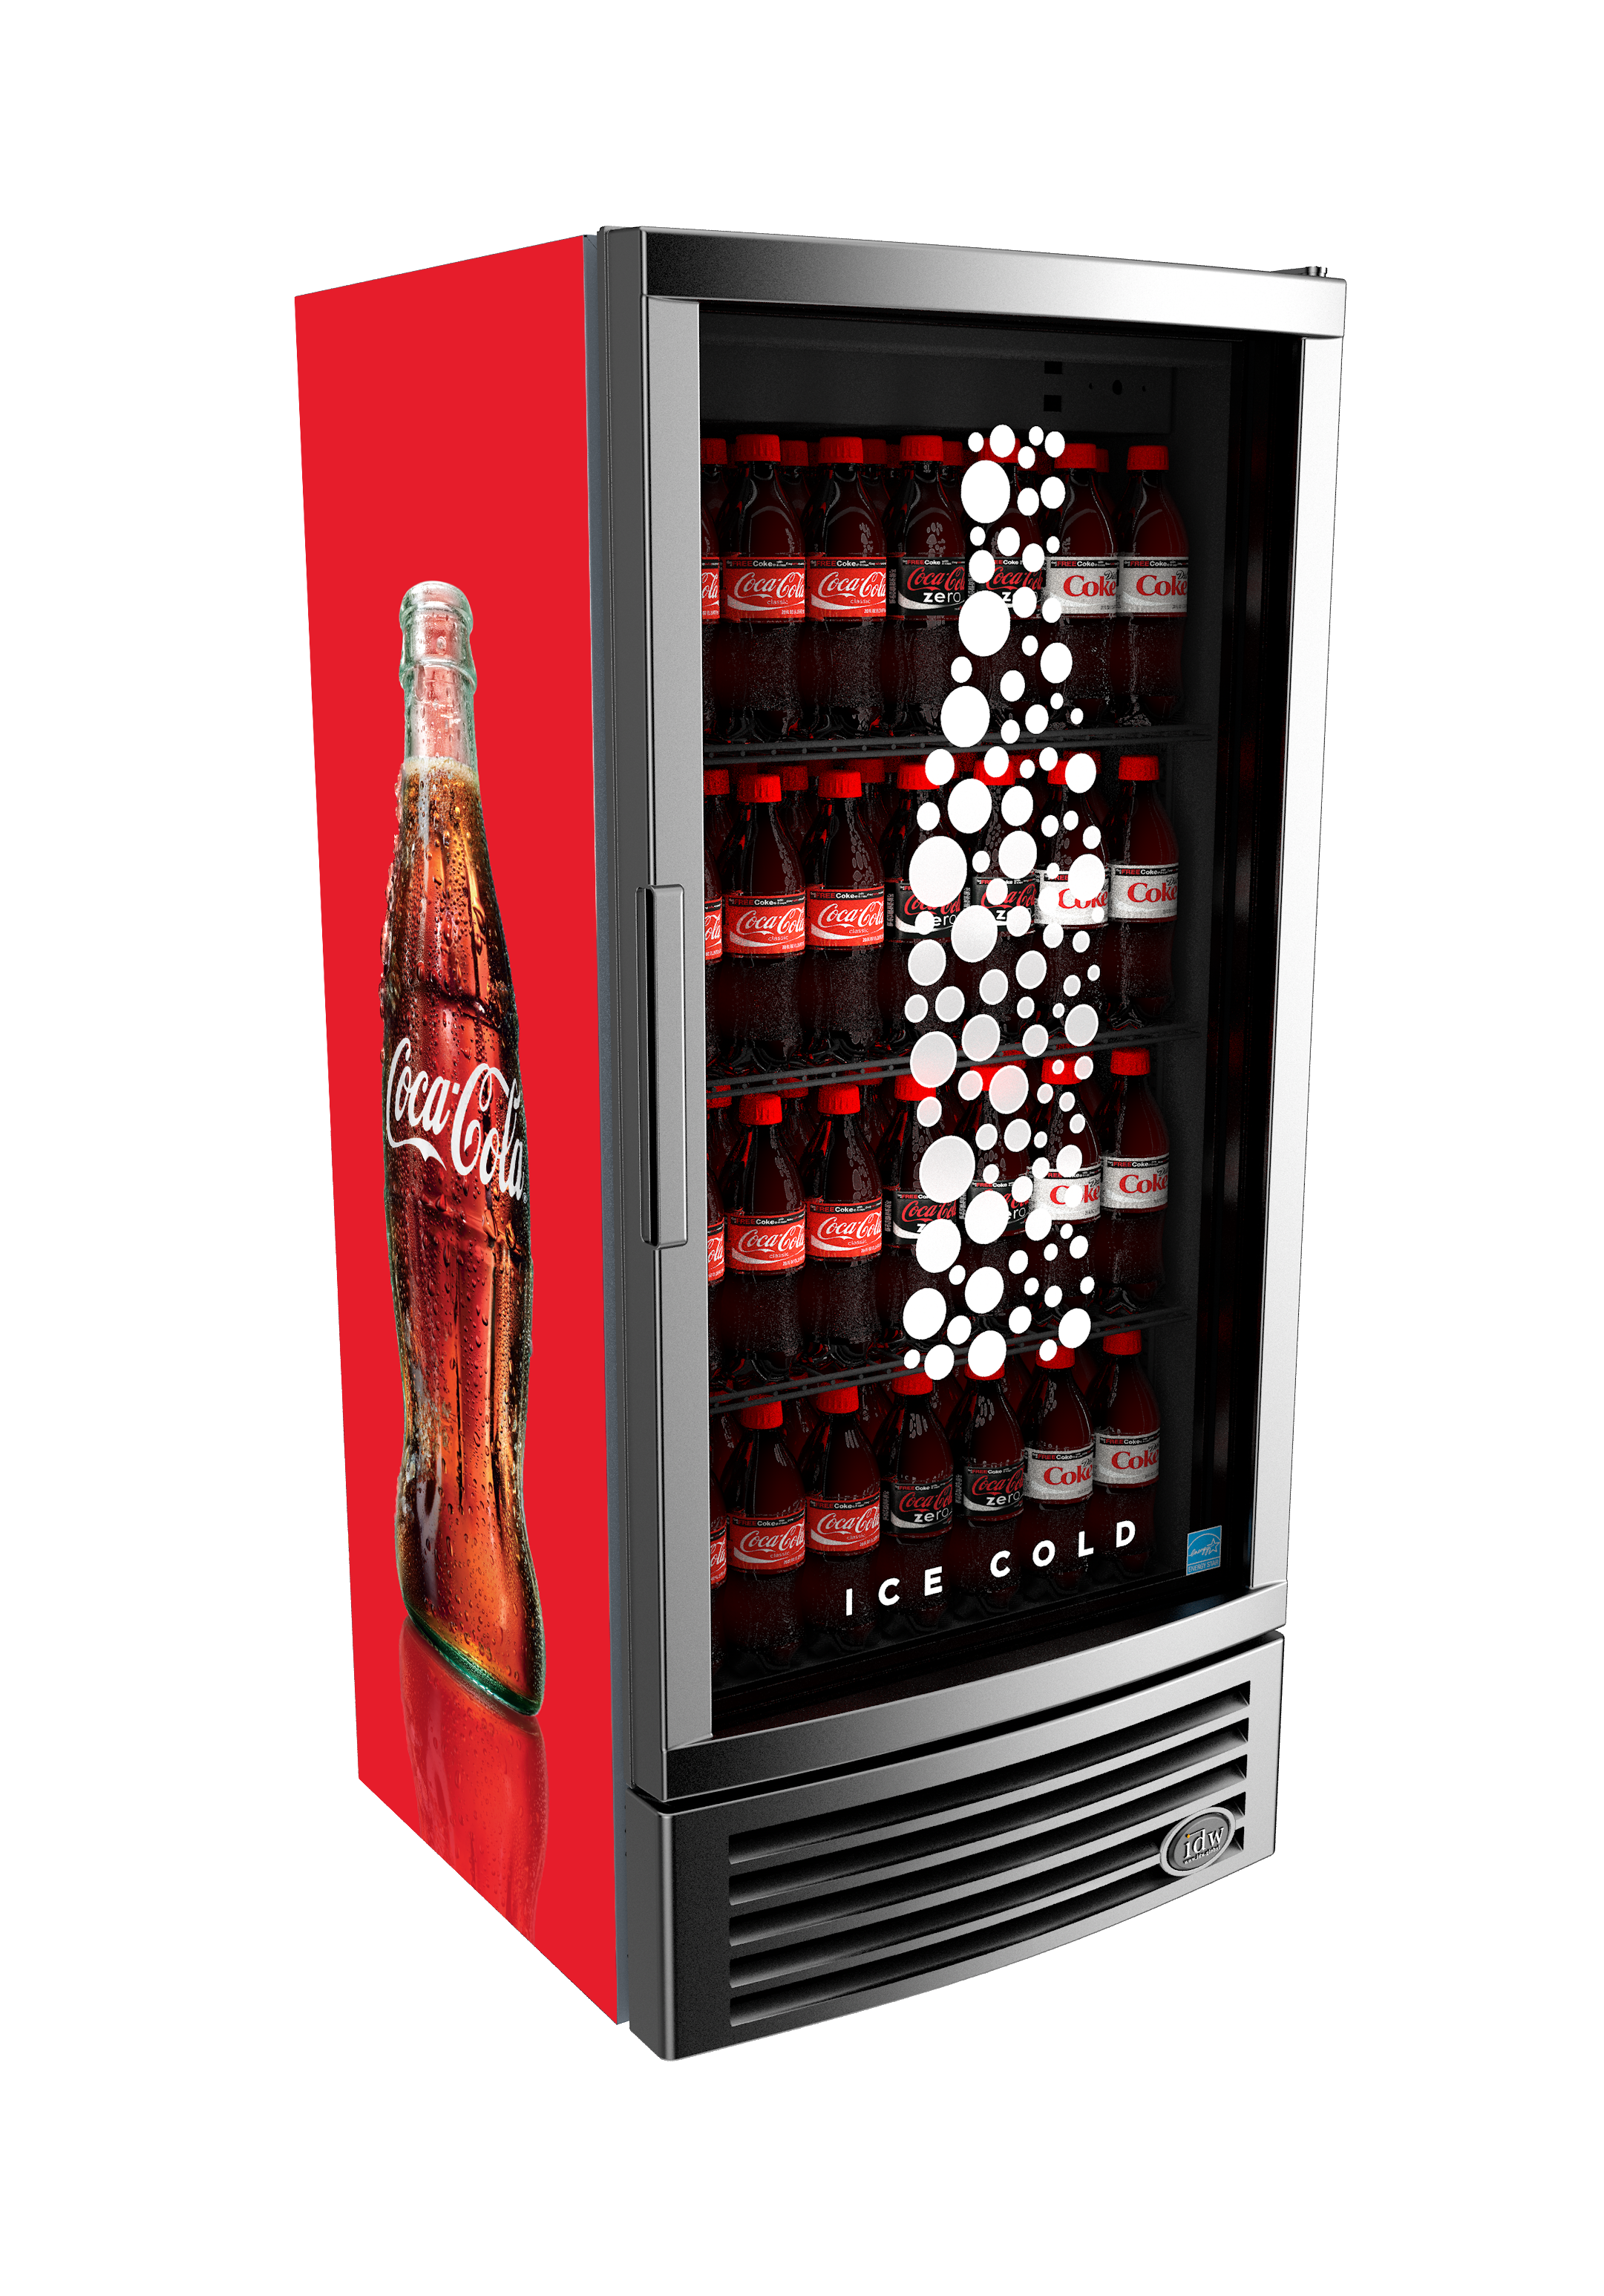 used coca cola refrigerator for sale